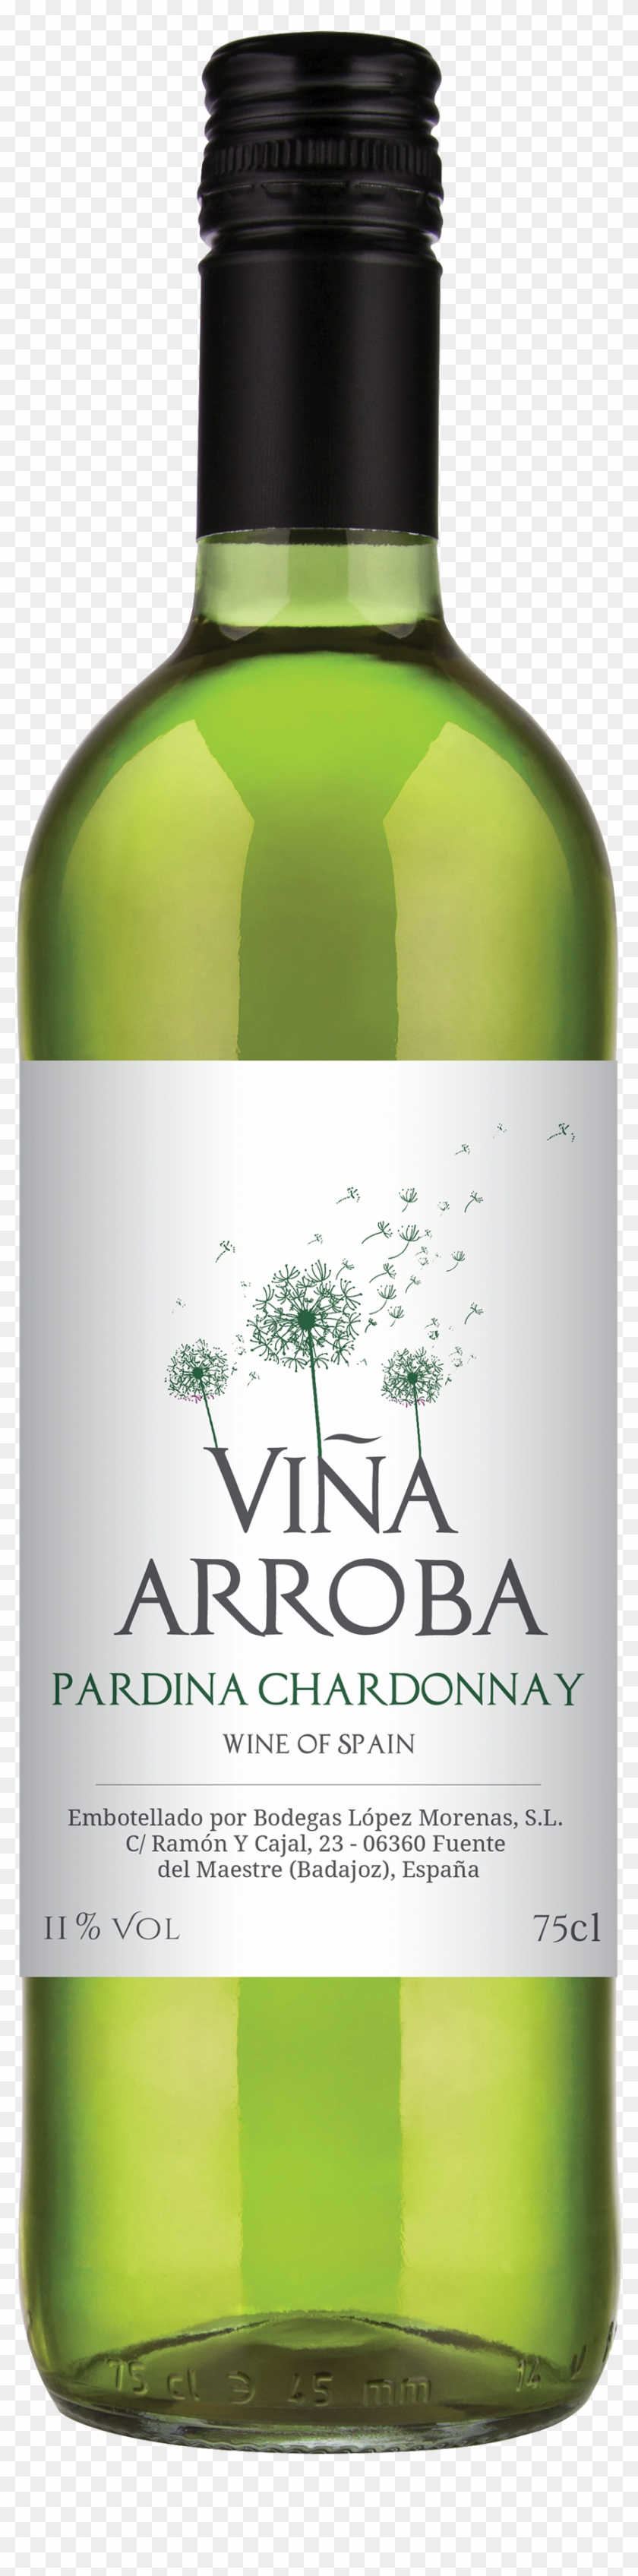 Product Information Downloads - Vina Arroba Pardina Chardonnay Clipart #3771484